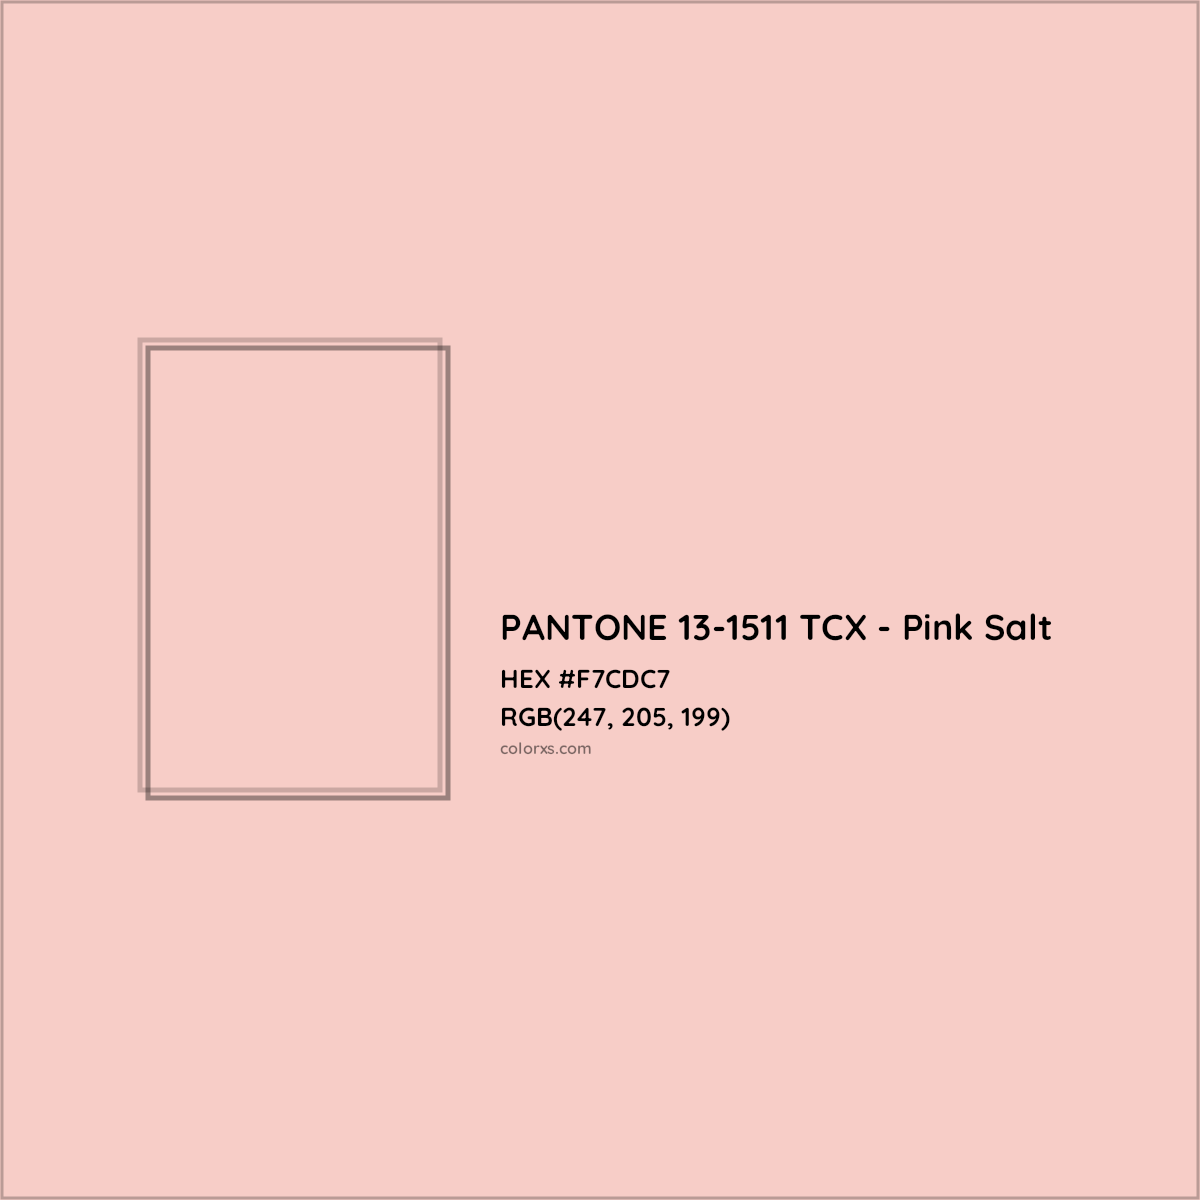 HEX #F7CDC7 PANTONE 13-1511 TCX - Pink Salt CMS Pantone TCX - Color Code